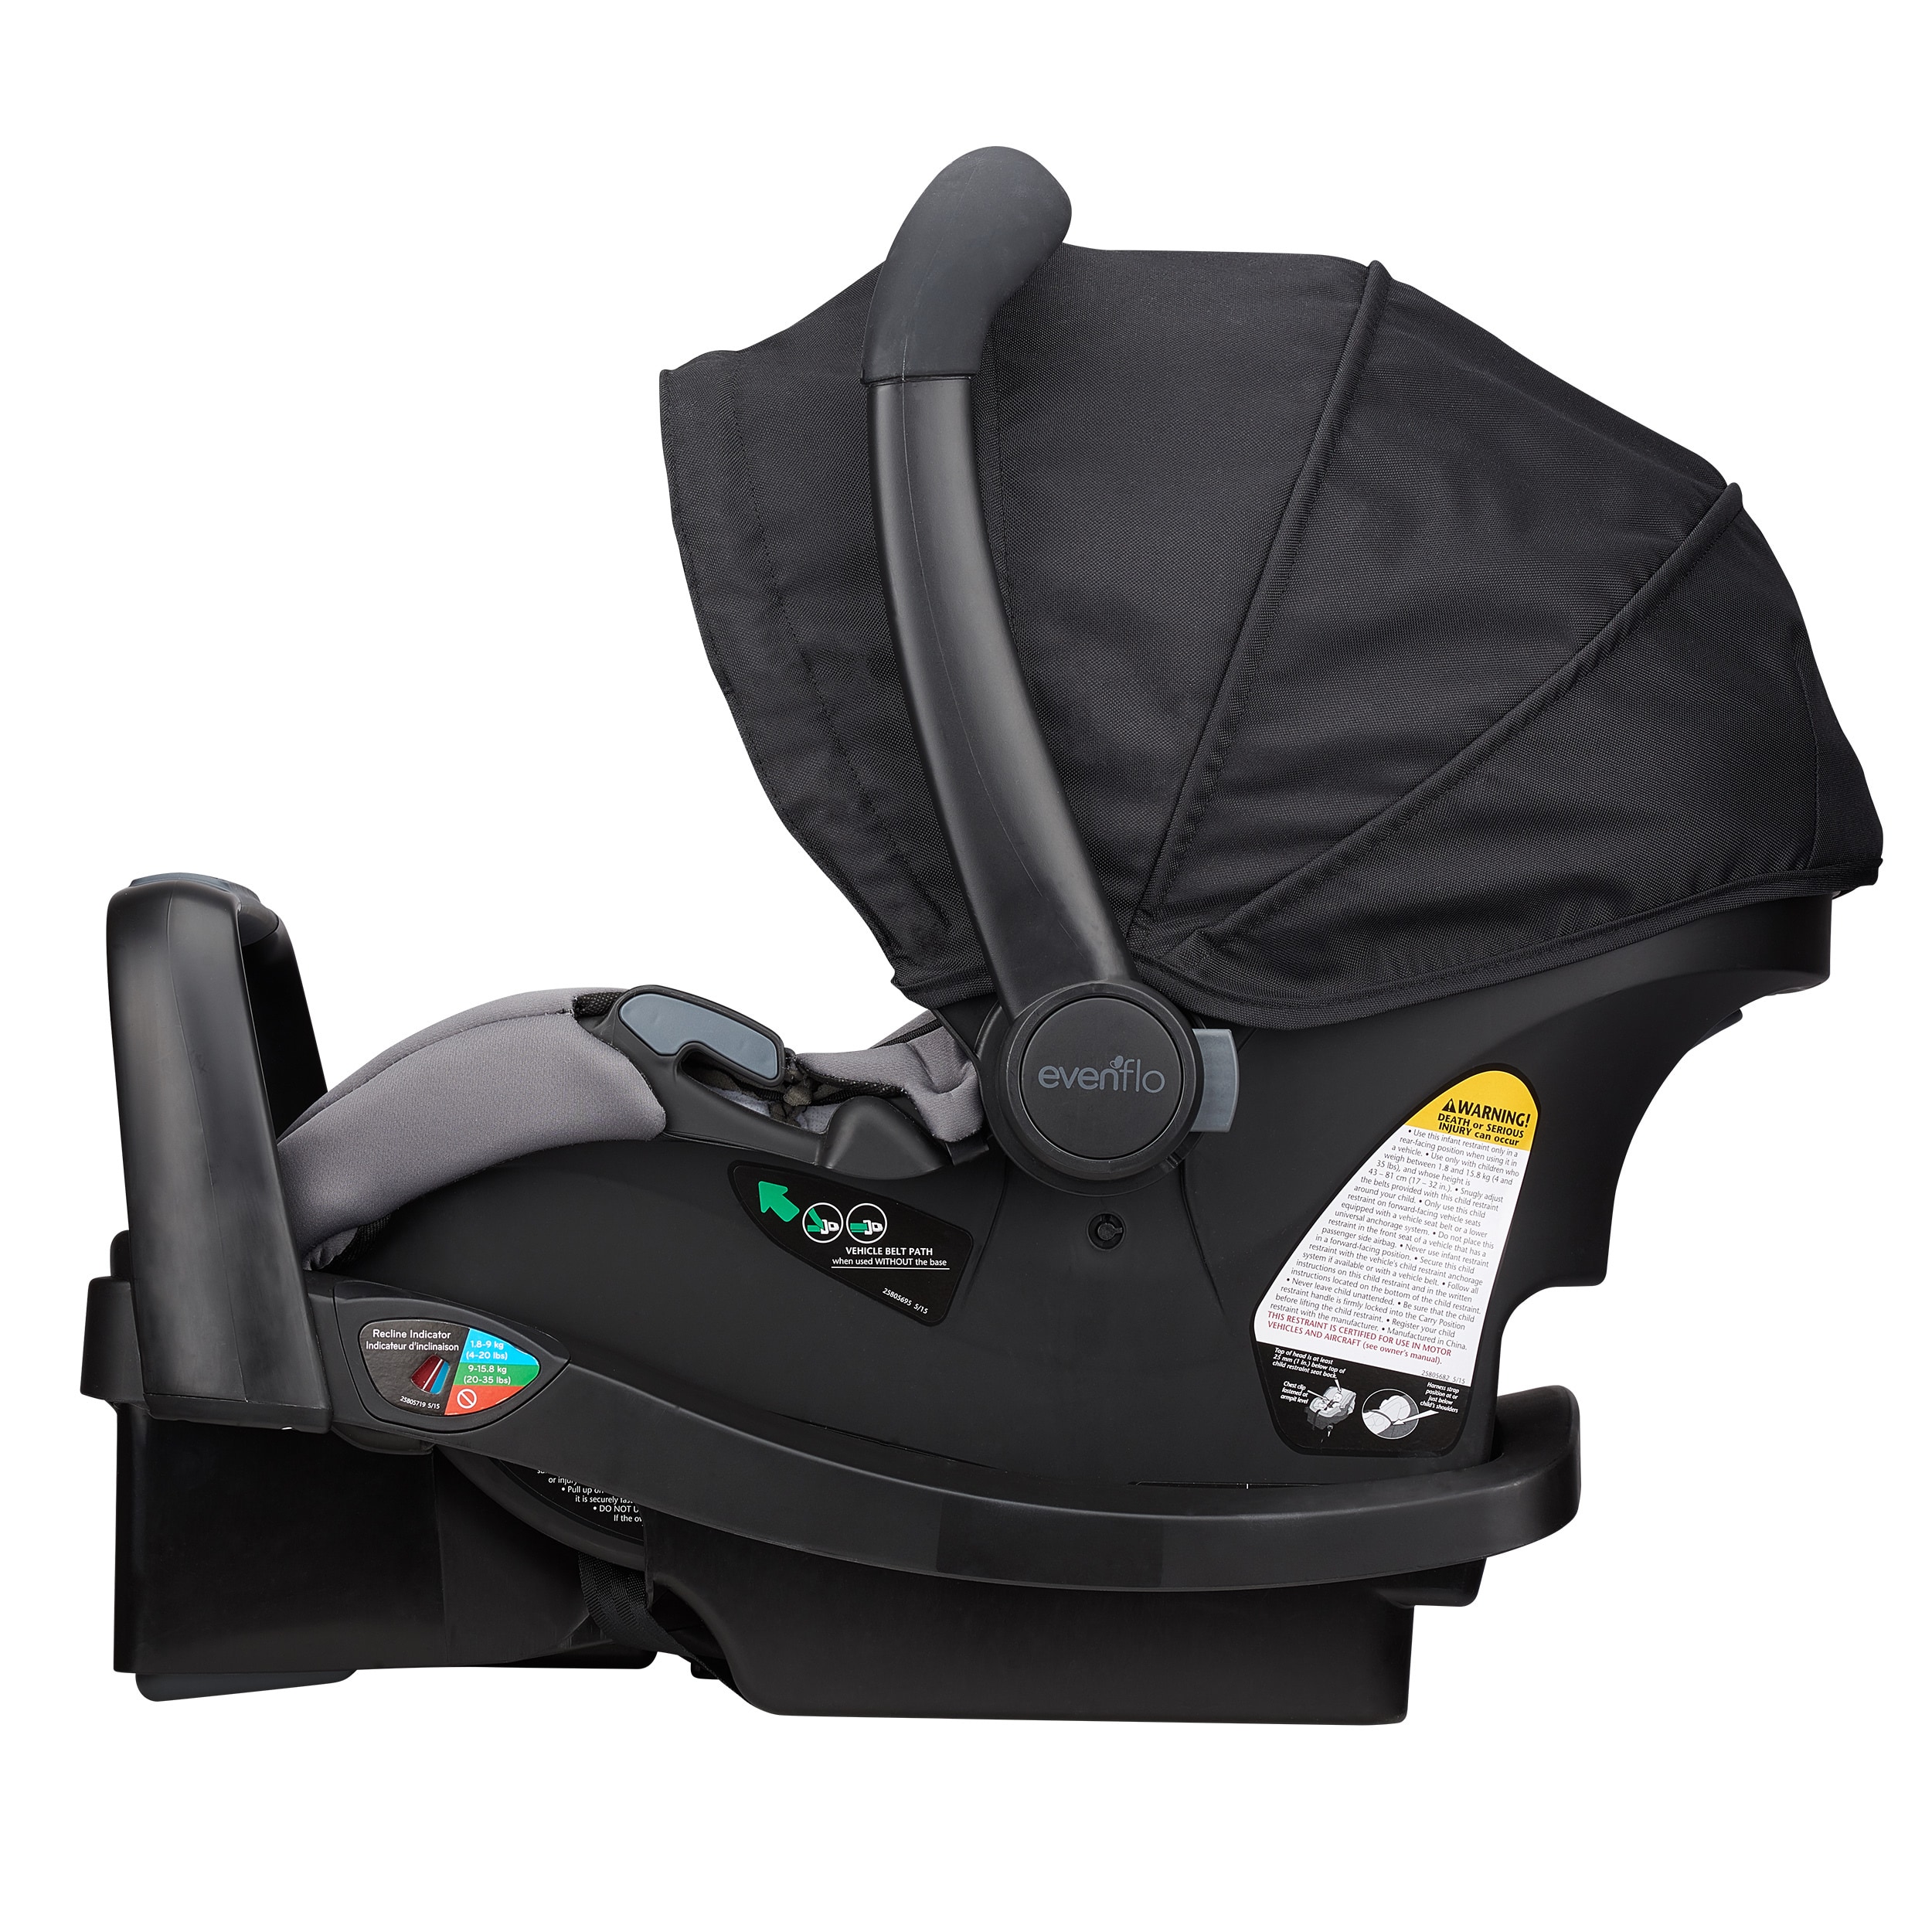 Evenflo Safemax Infant Car Seat, Shiloh - image 5 of 6